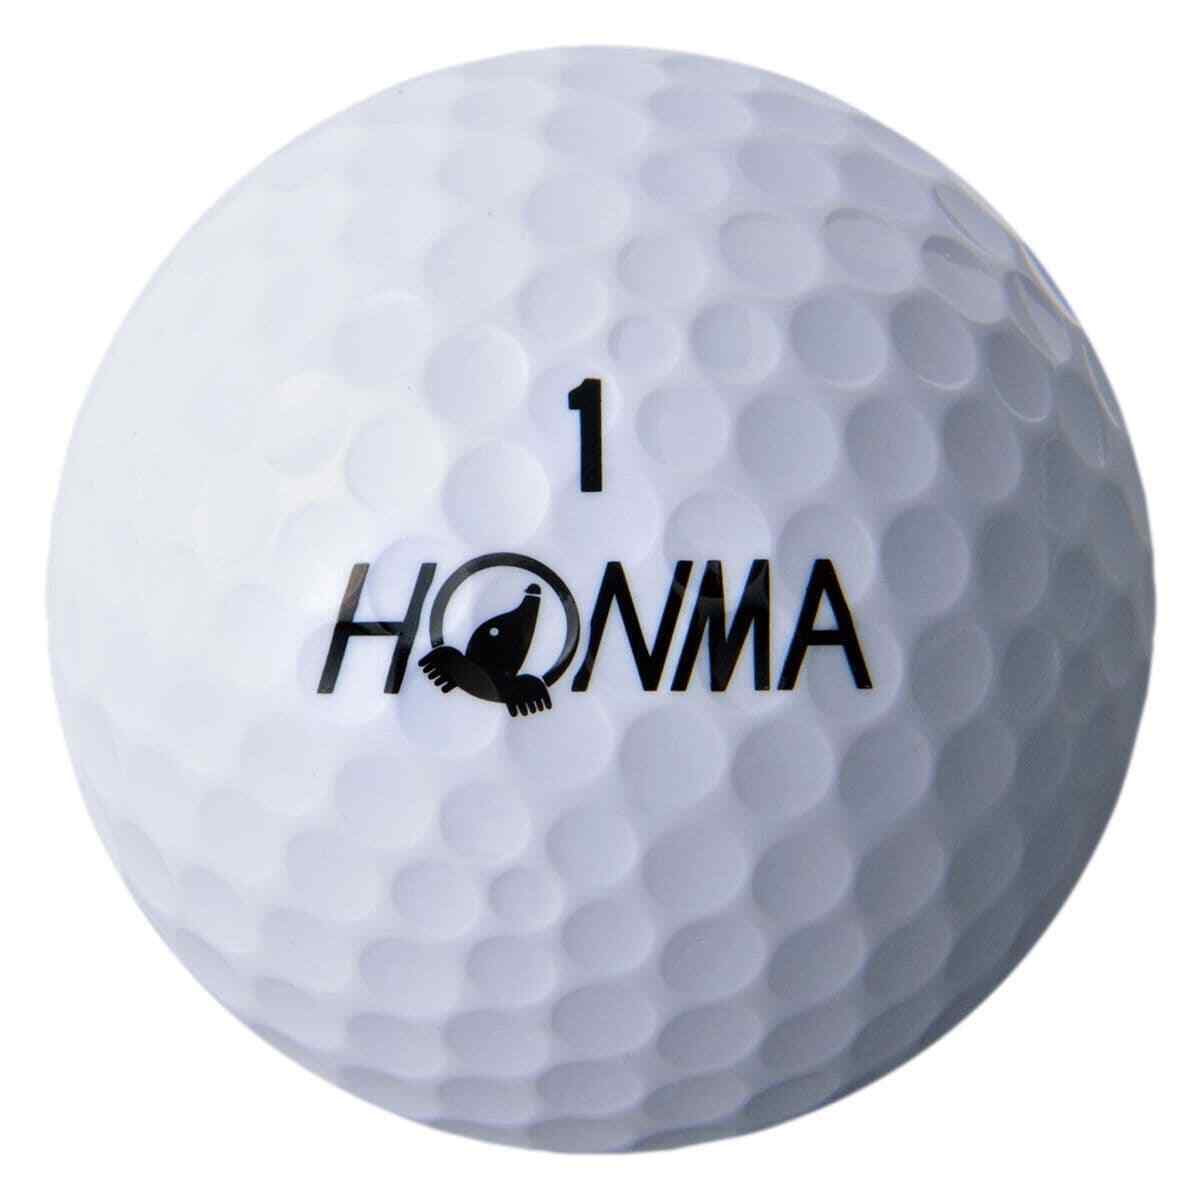 12 honma a1 golf balls pearl/pearl 1 grade